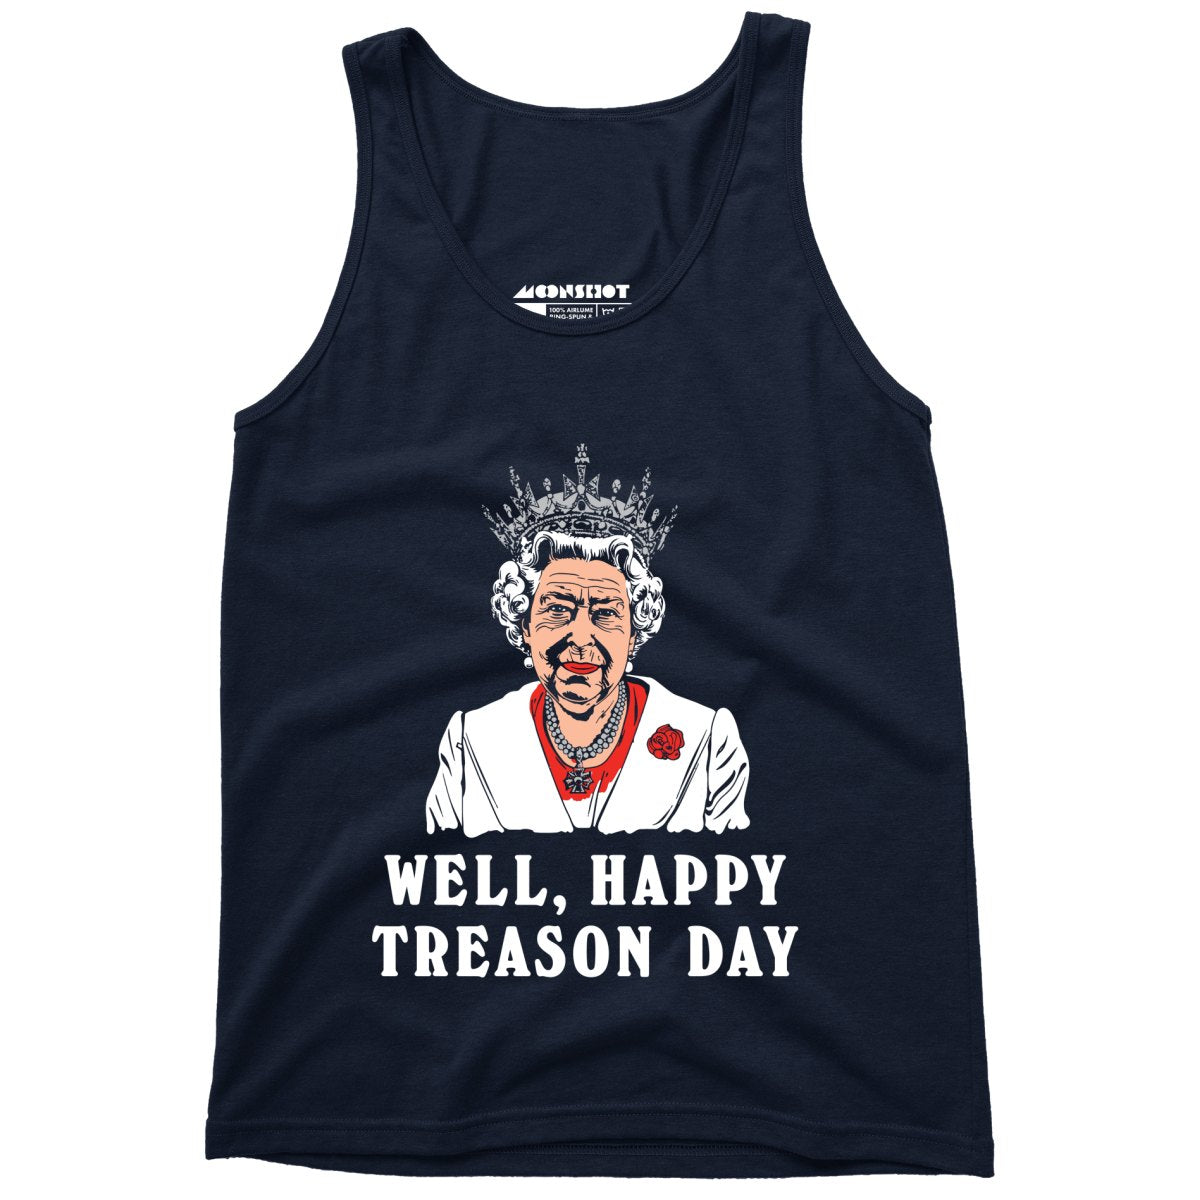 Well, Happy Treason Day - Unisex Tank Top